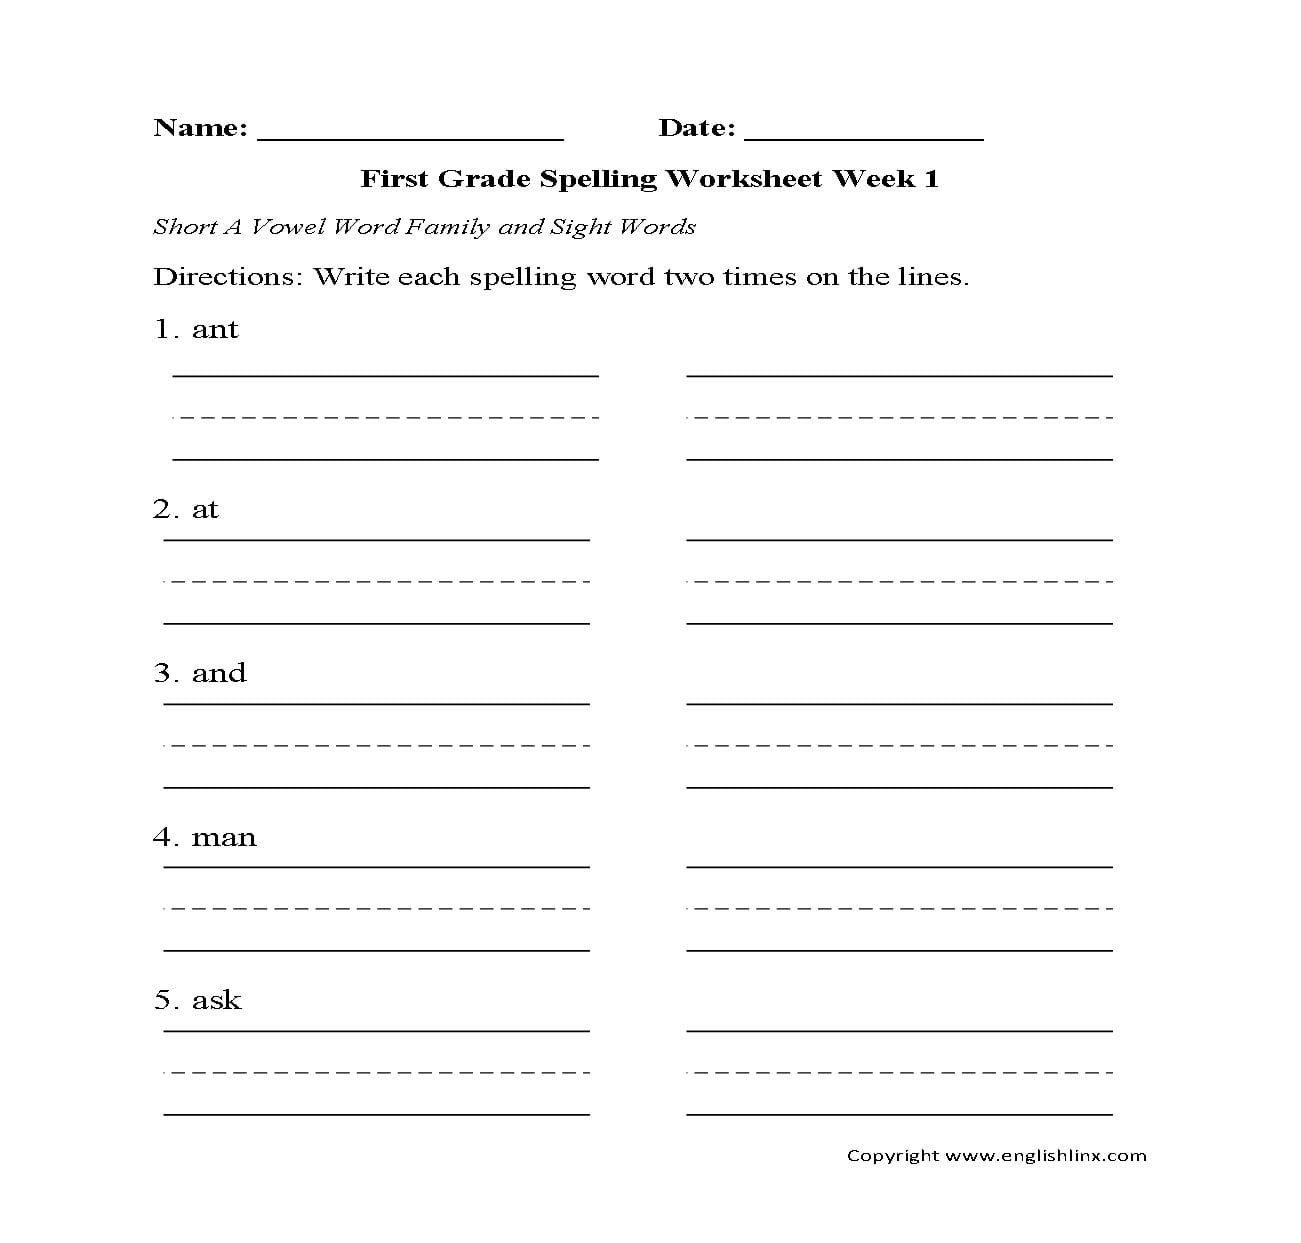 Spelling Worksheets  First Grade Spelling Worksheets For 1St Grade Spelling Worksheets